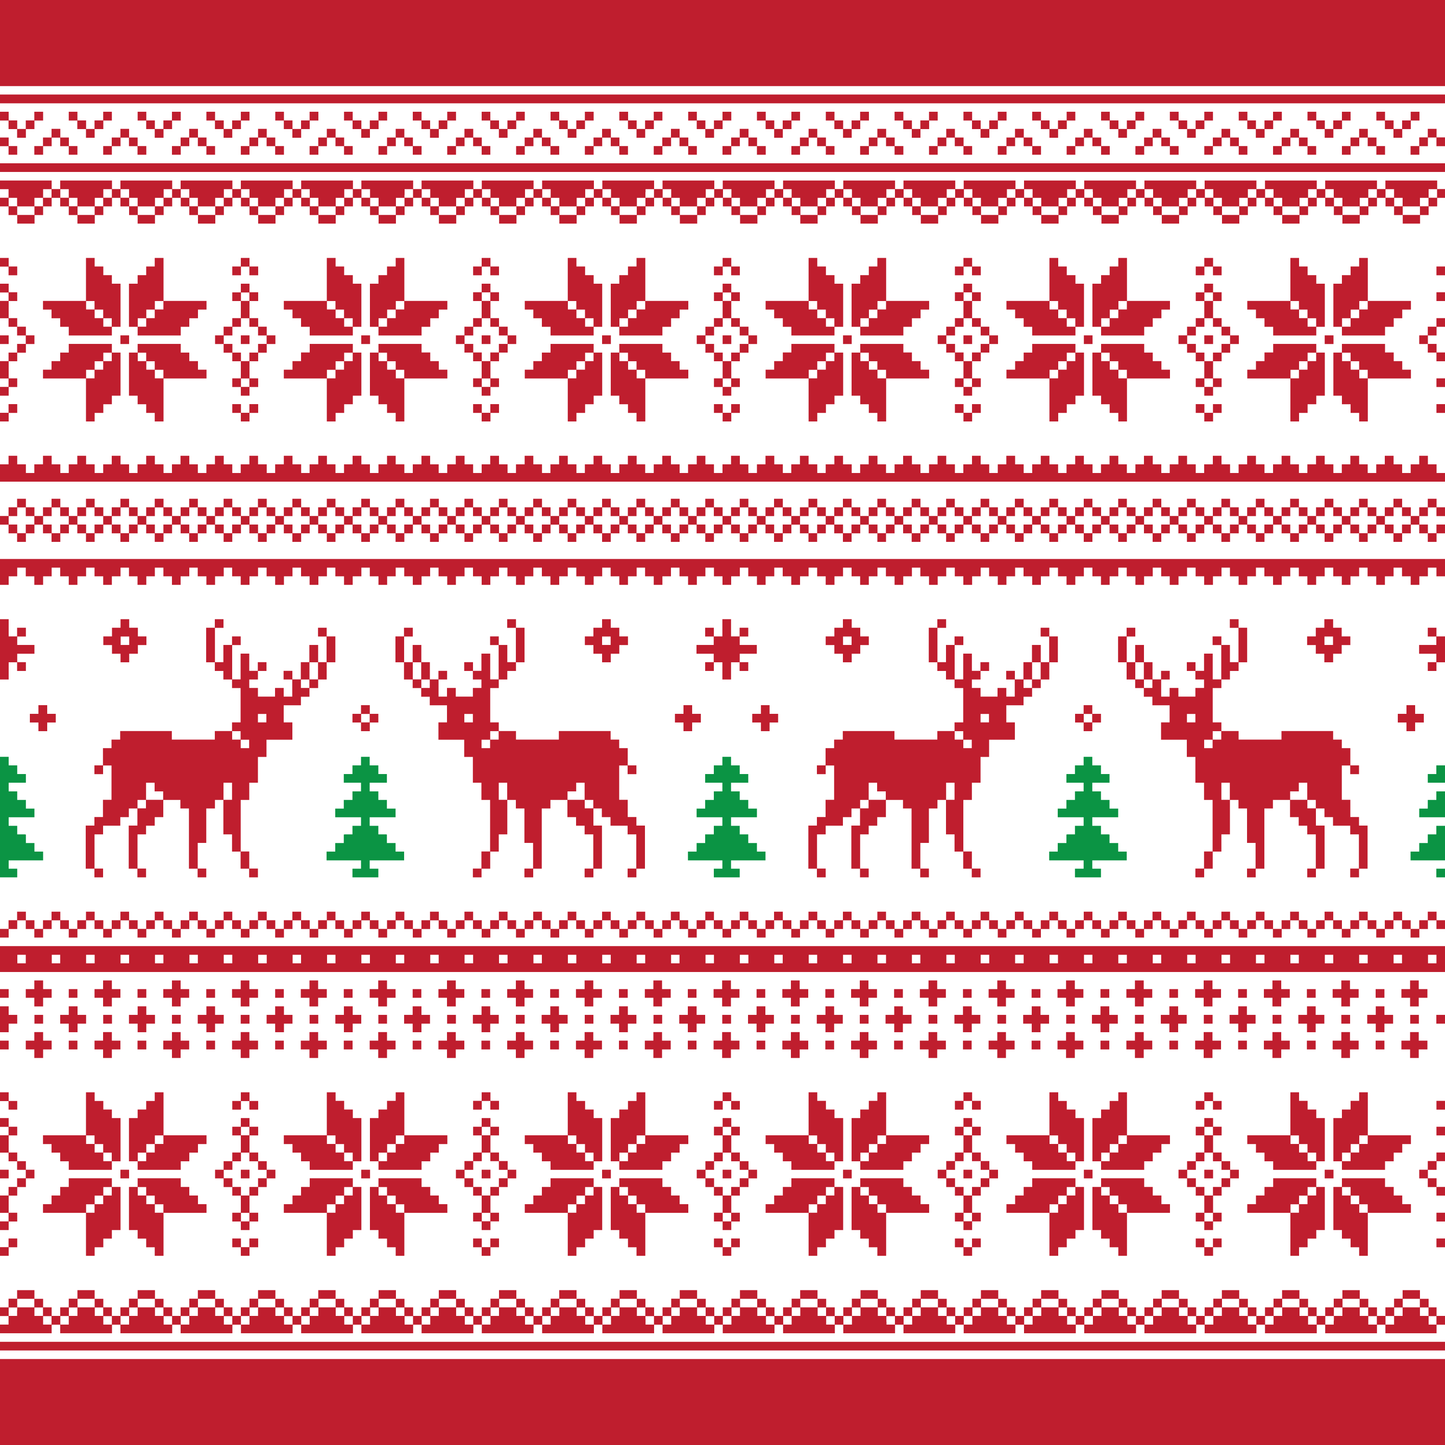 Christmas Sweater with Reindeer (Adhesive Vinyl - 12" x 12" Printed Sheet)